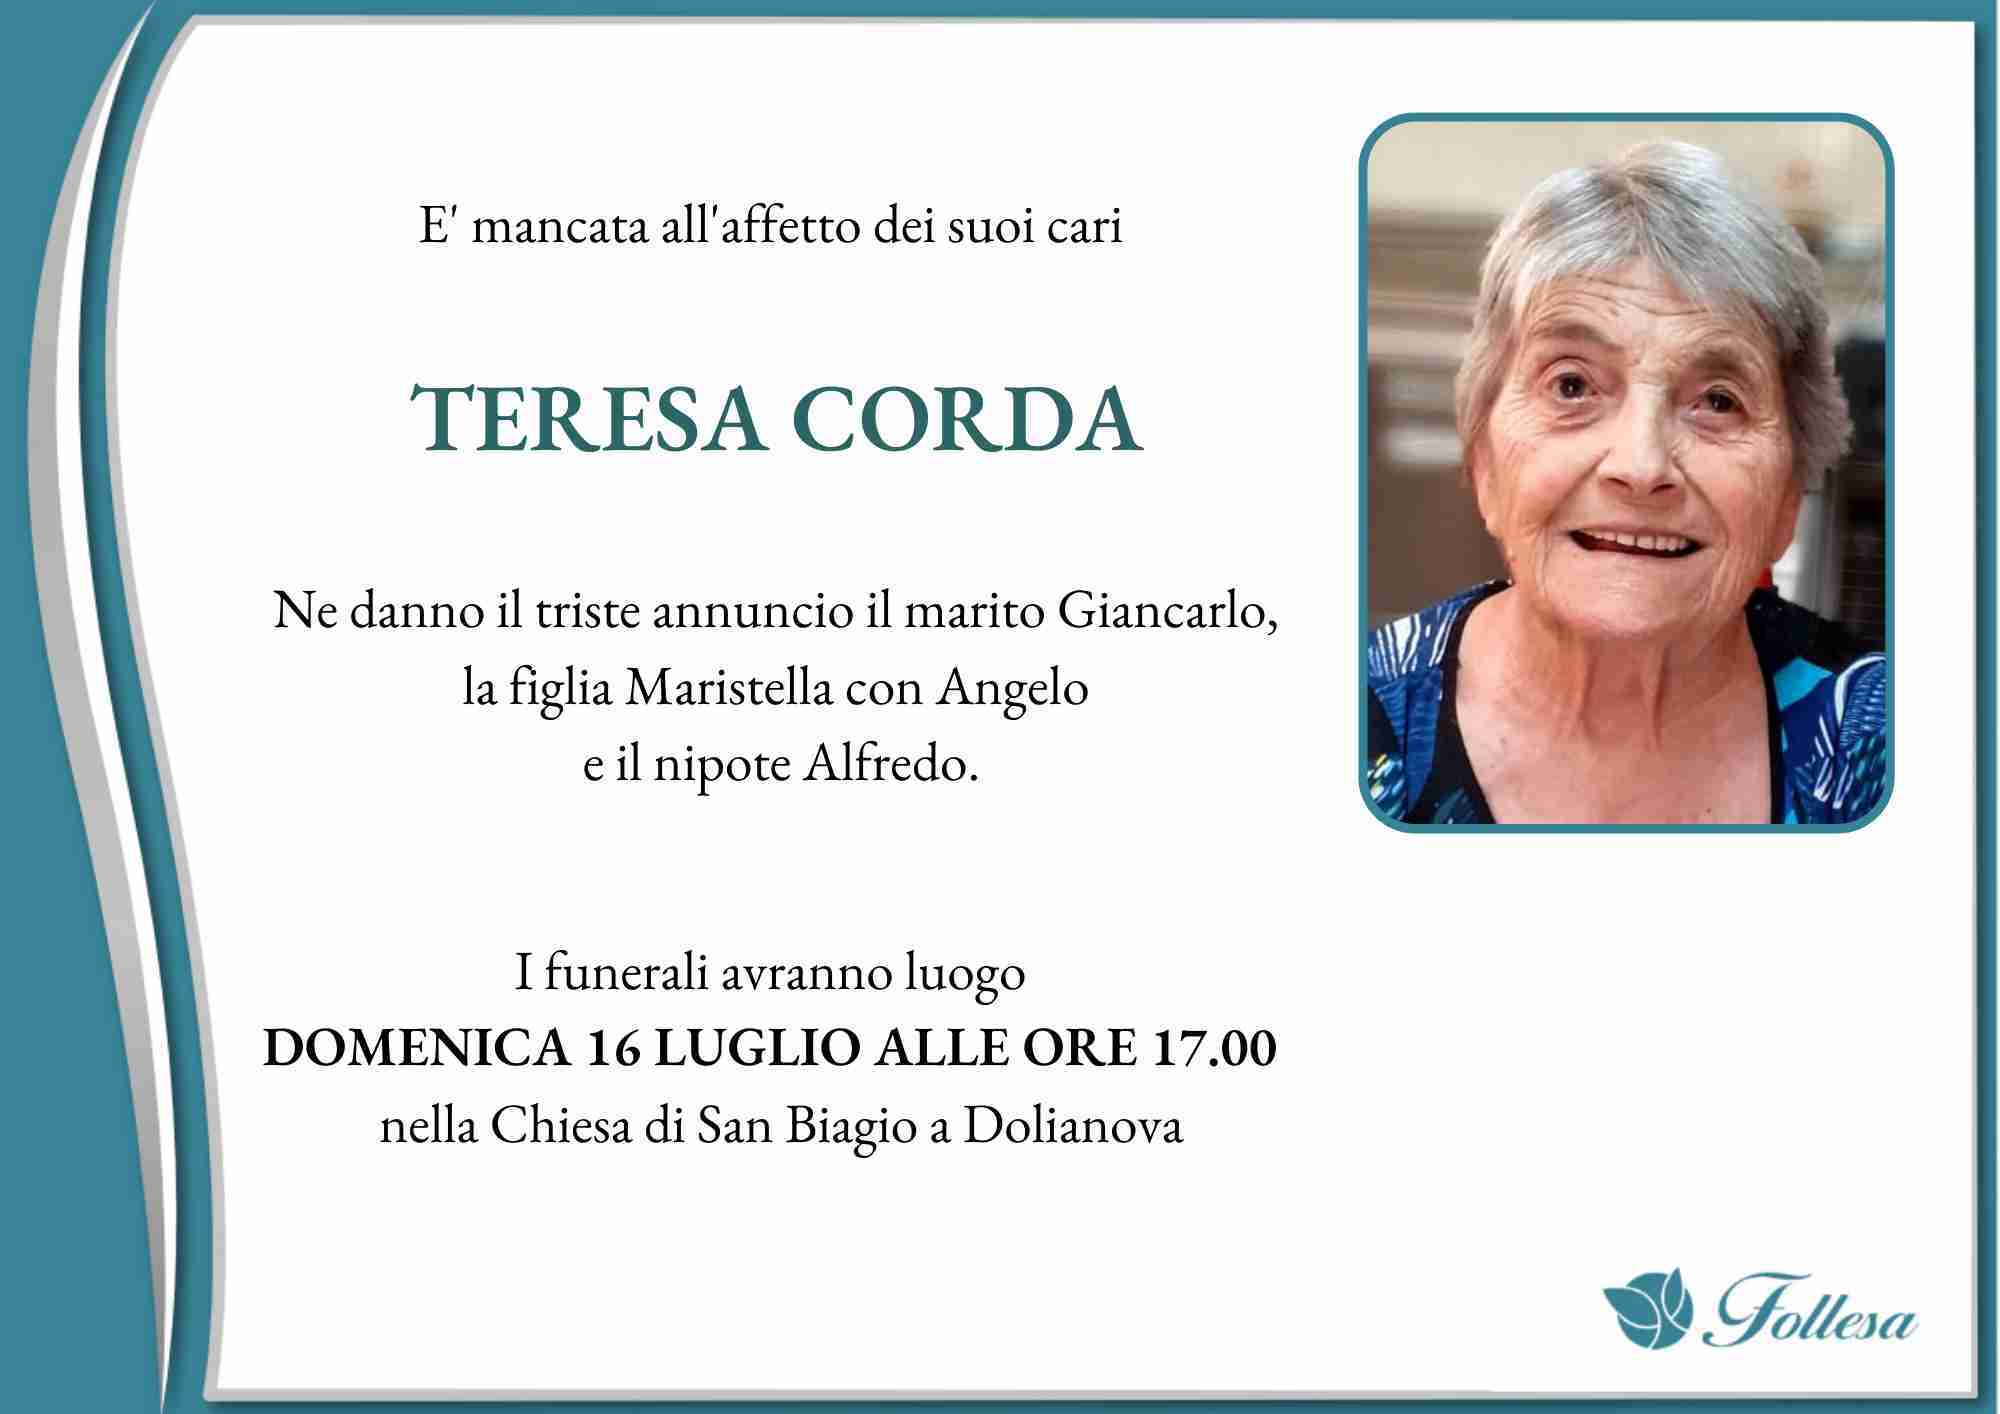 Teresa Corda